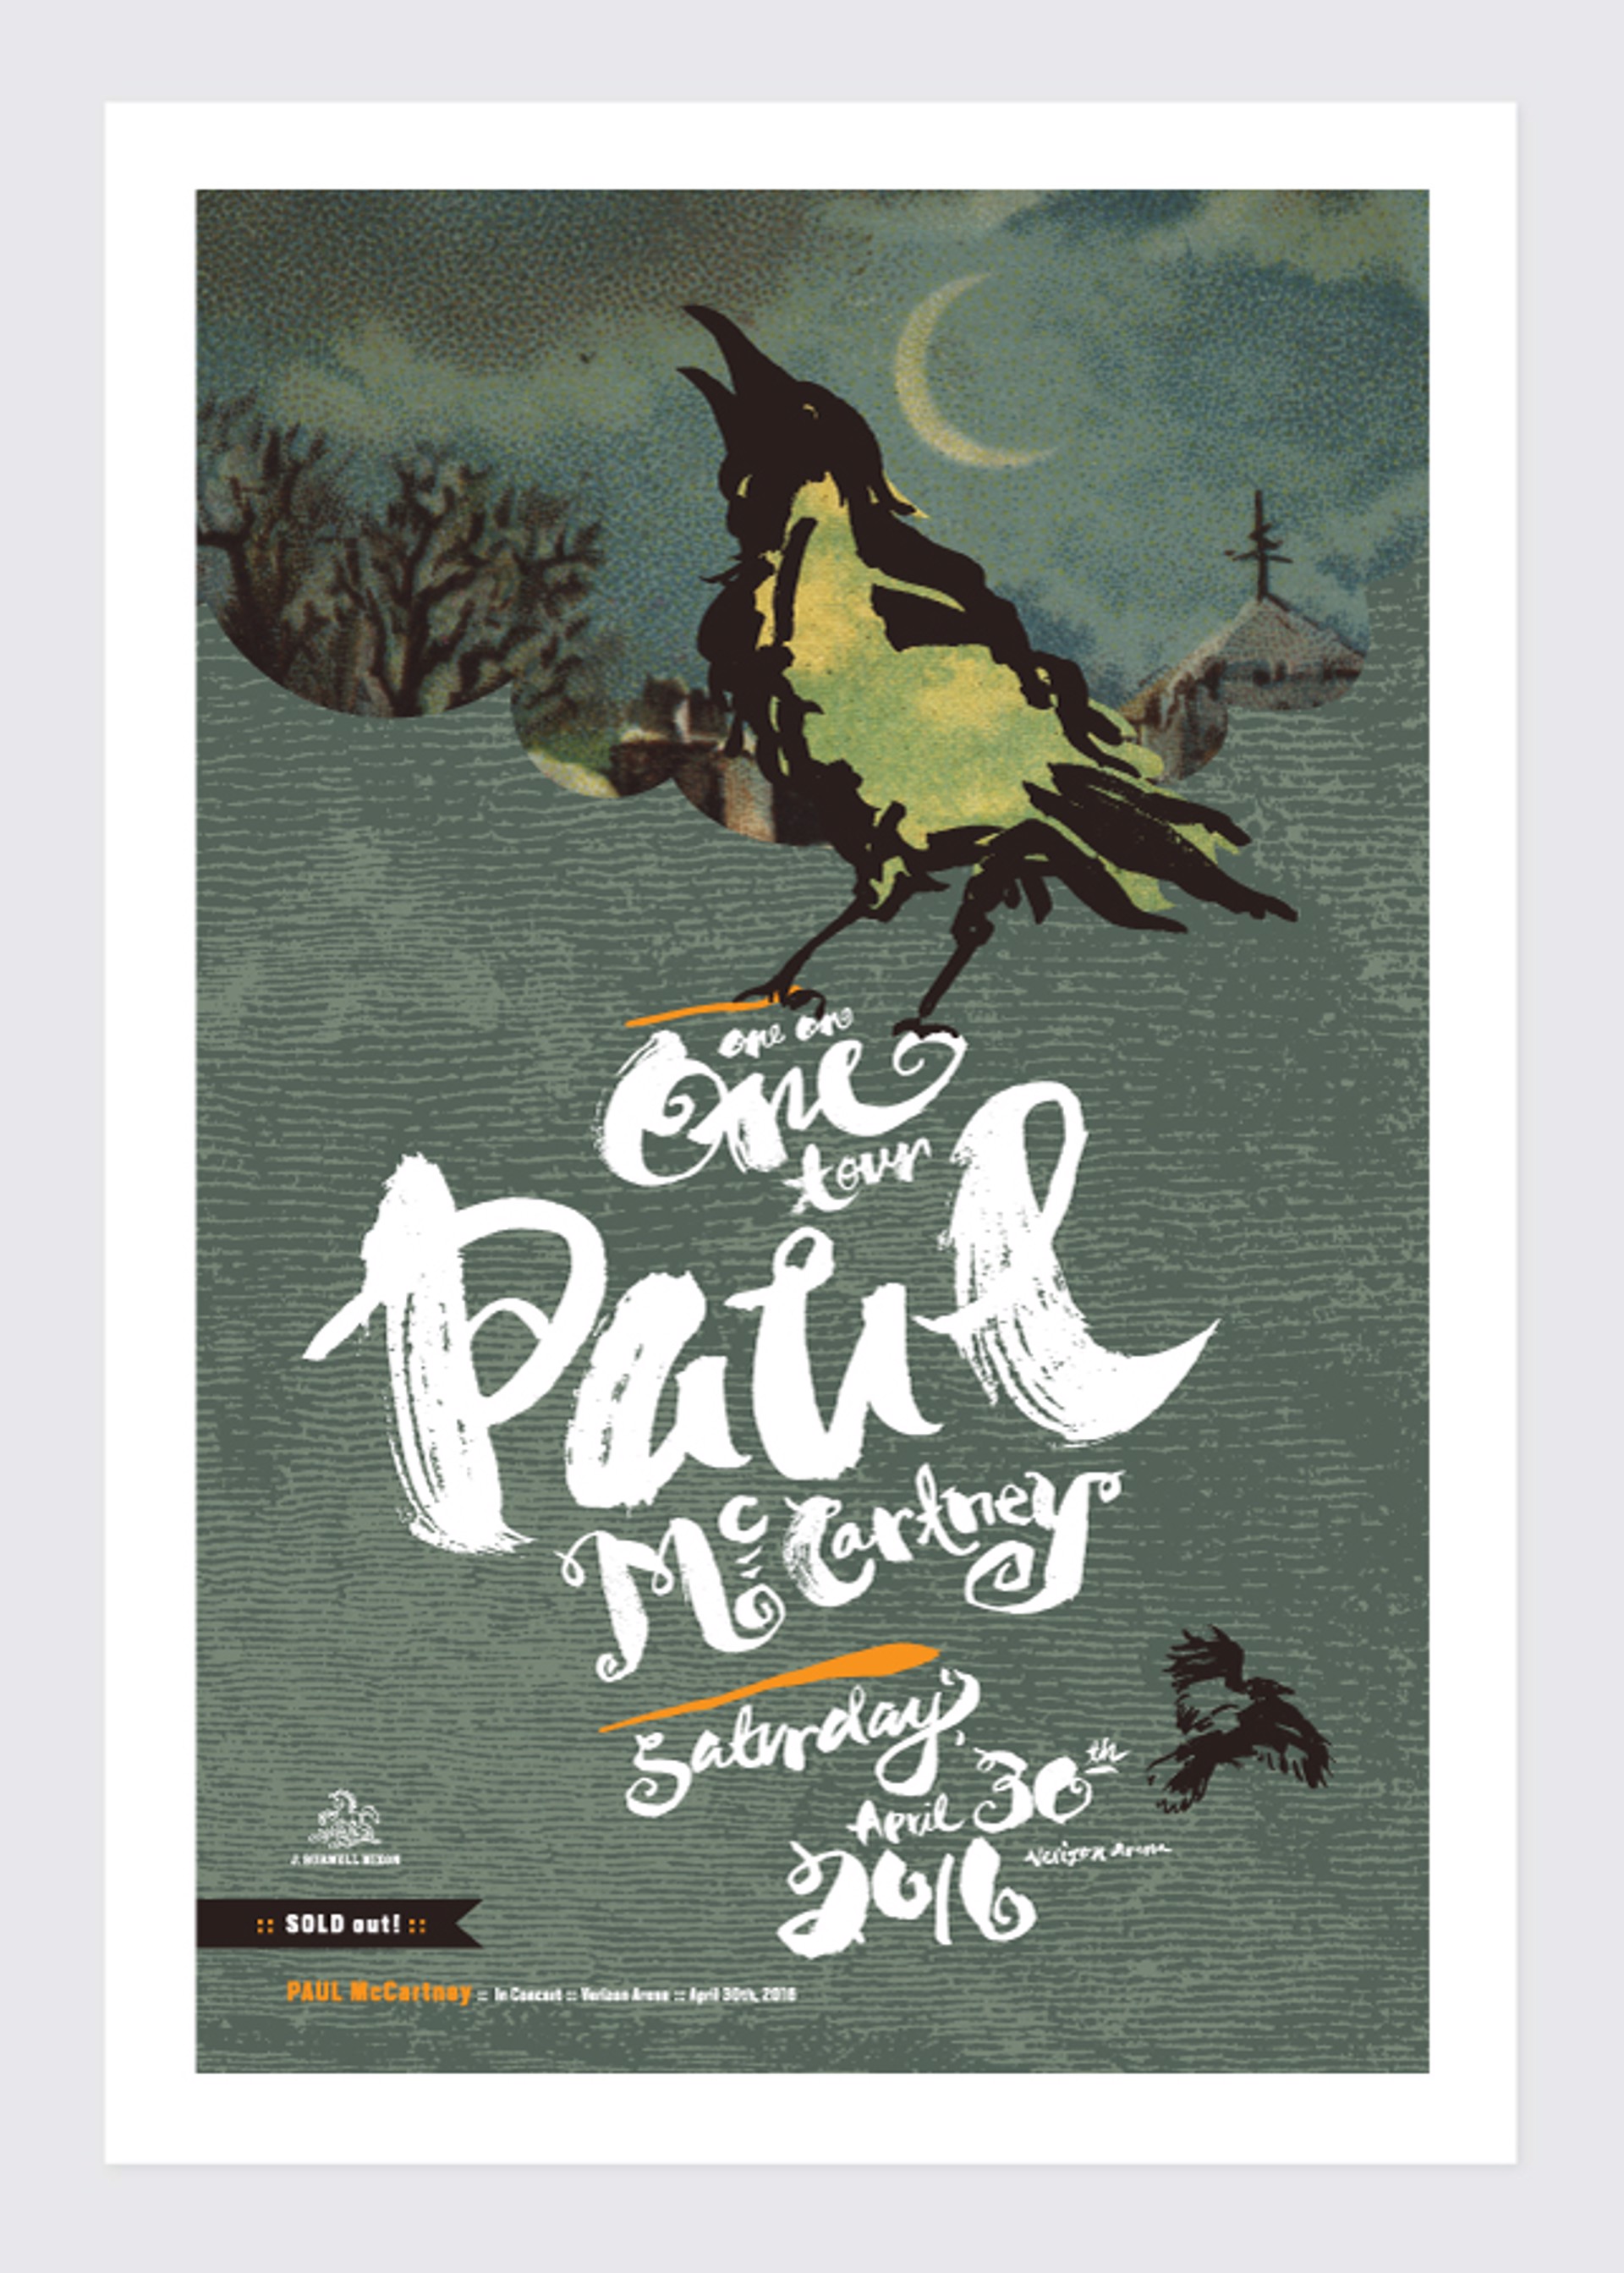 Paul McCartney Concert Poster by Jamie Burwell Mixon